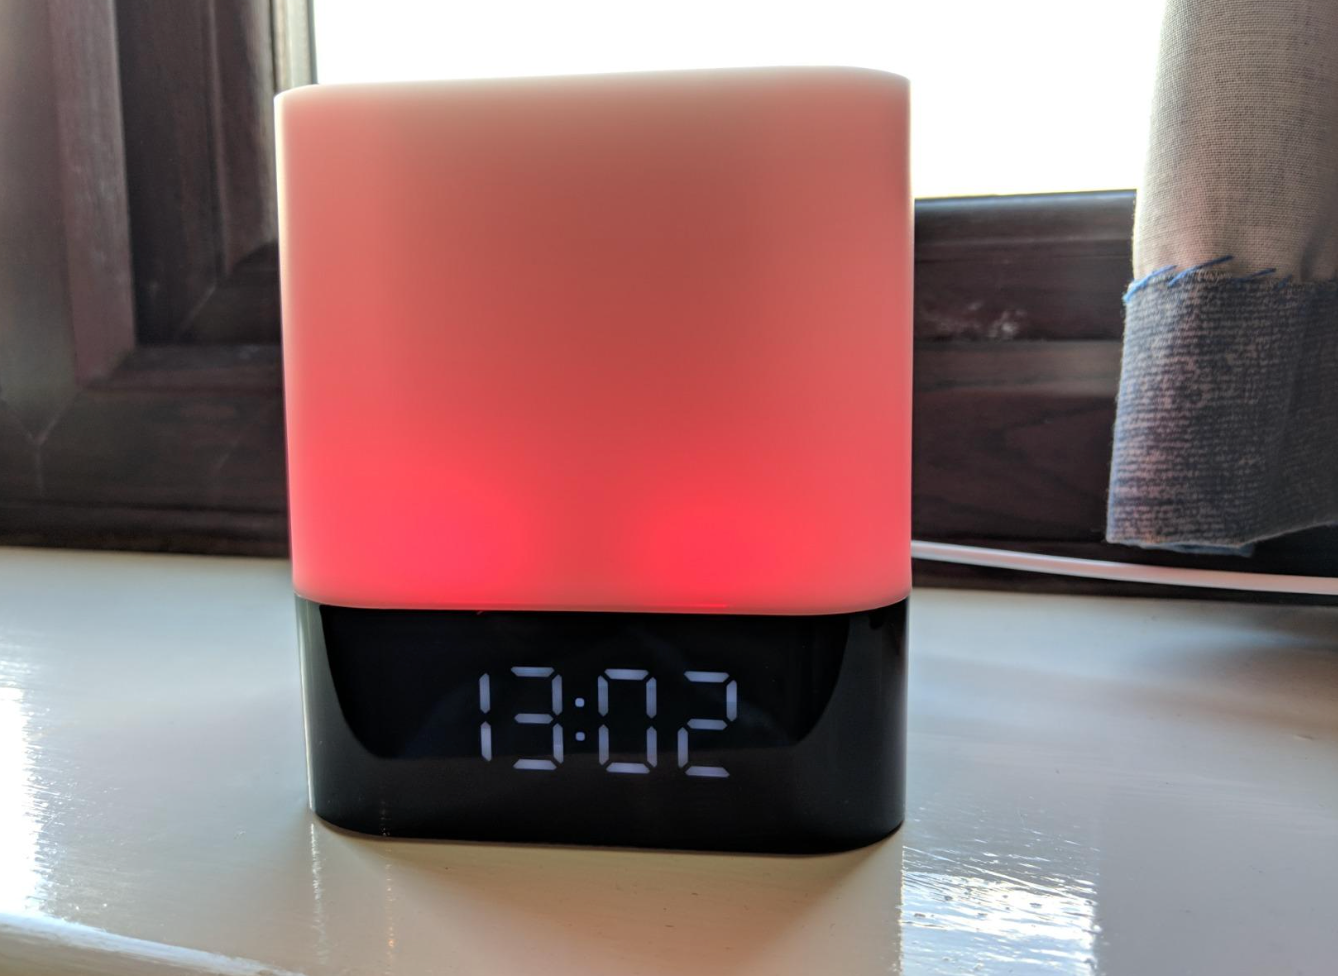 Bedside Lamp with Alarm Clock Bluetooth Speaker, Night Light Bedroom Decor RGB Color Changing LED Mood Light